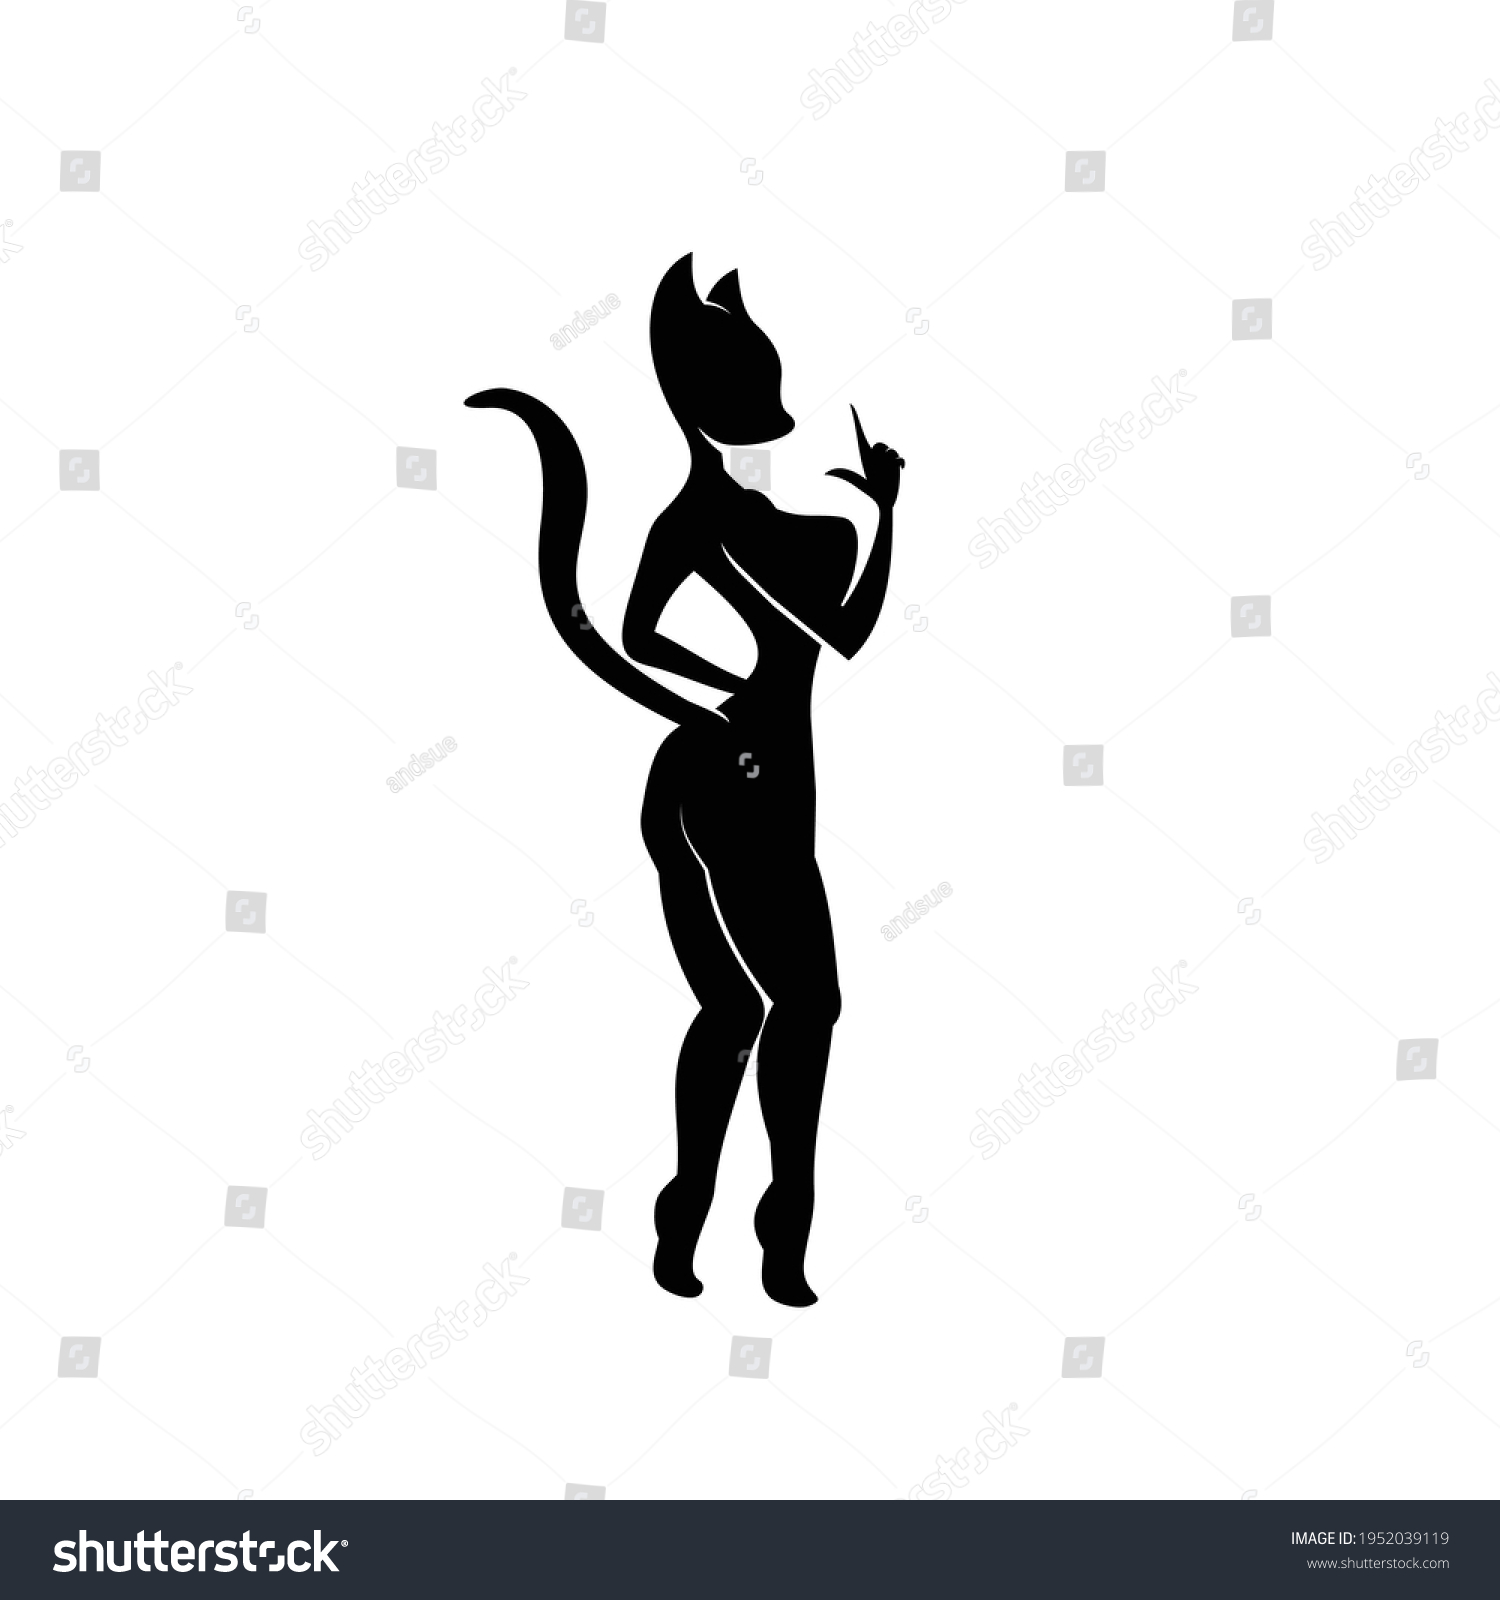 Sexy Cat Images Stock Photos Vectors Shutterstock